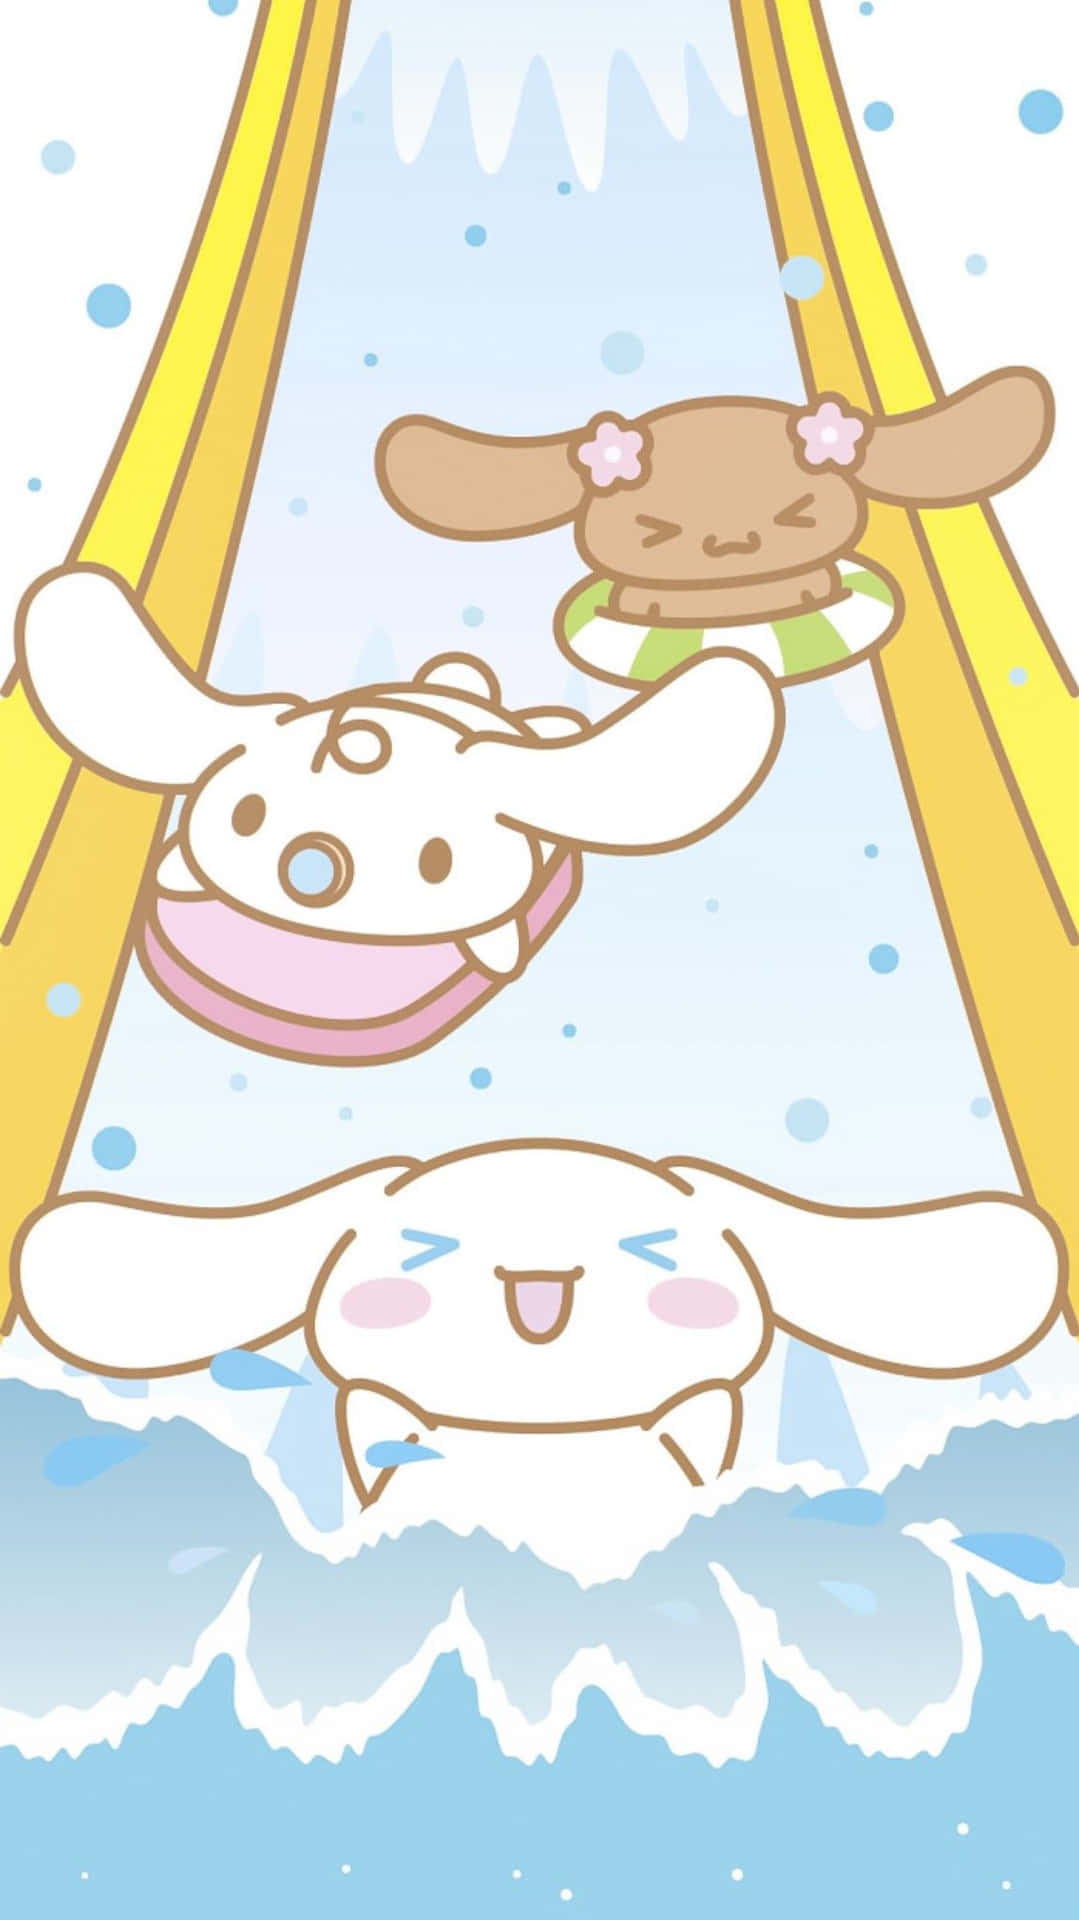 Download Cinnamoroll looks ever so cute in this adorable Sanrio artwork.  Wallpaper